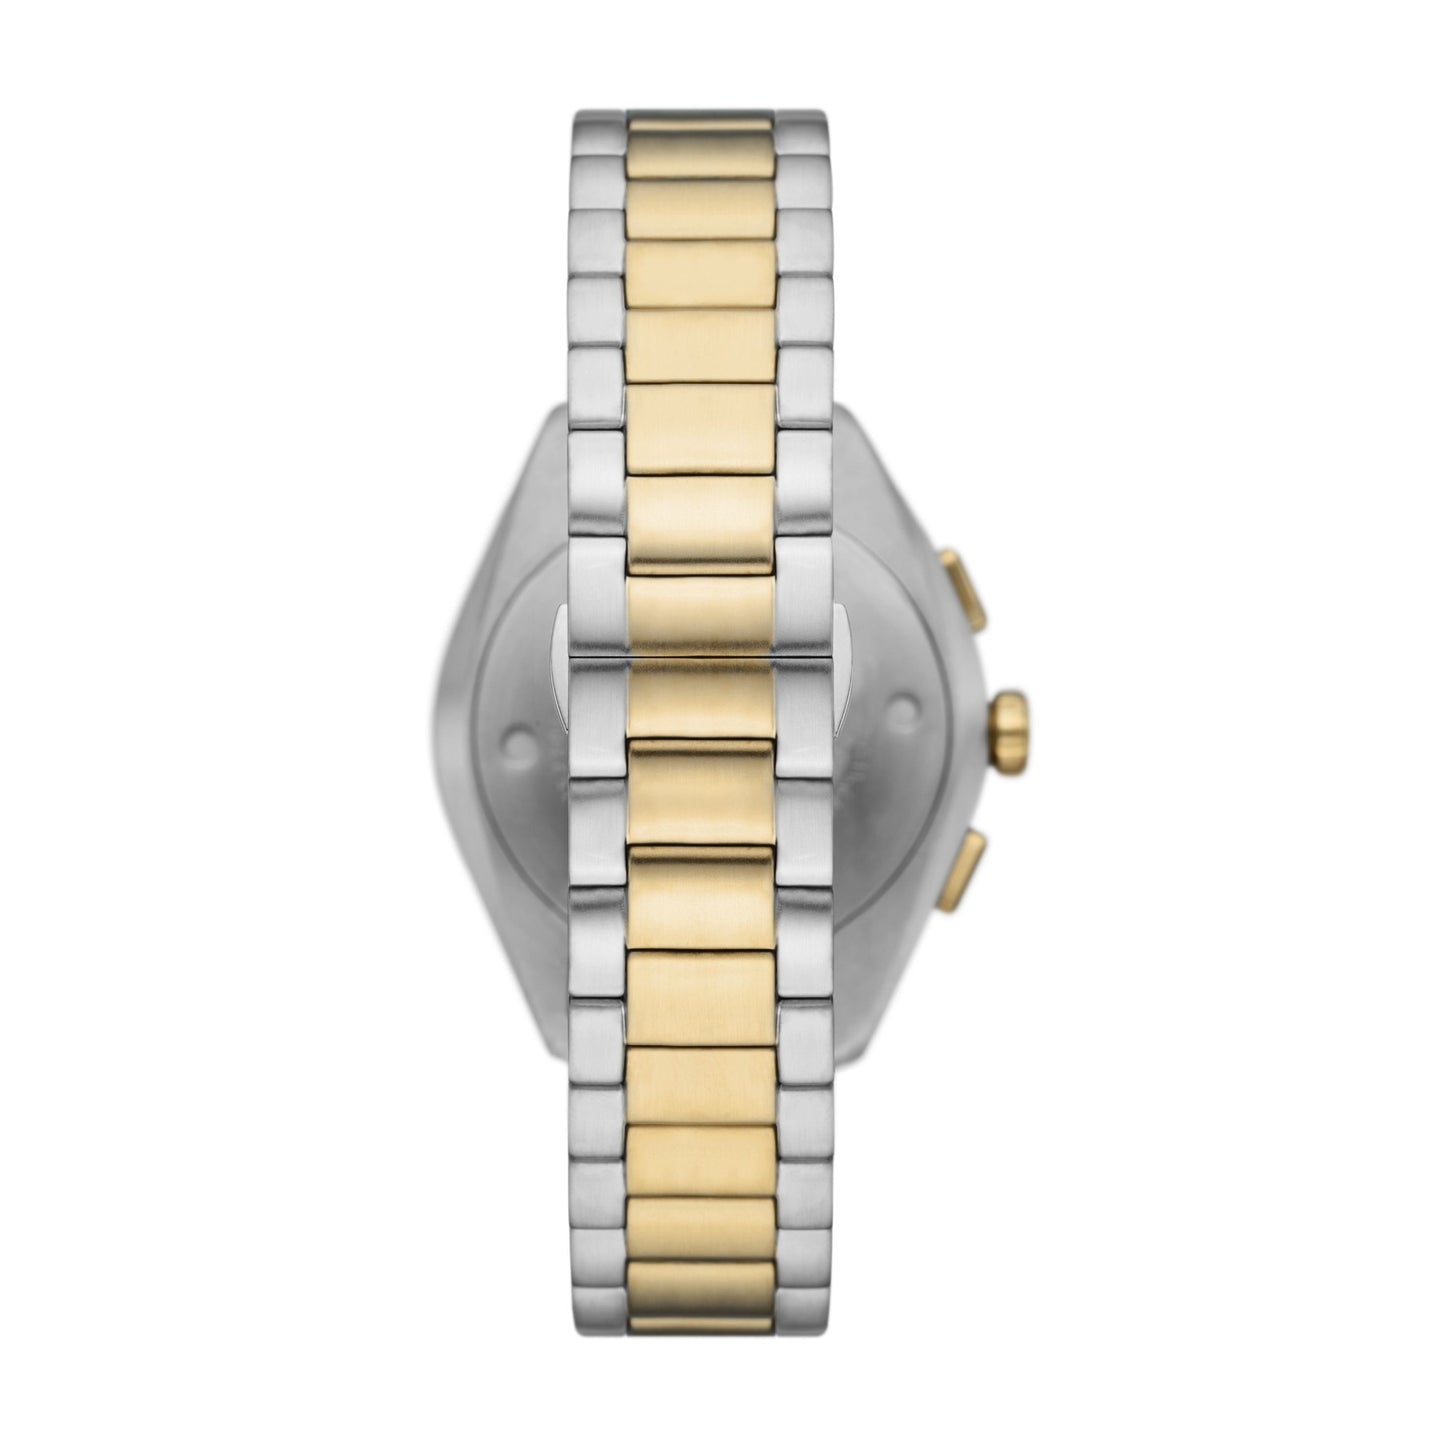 Emporio Armani 43mm Claudio Chronographic Green & Two Tone Steel Watch